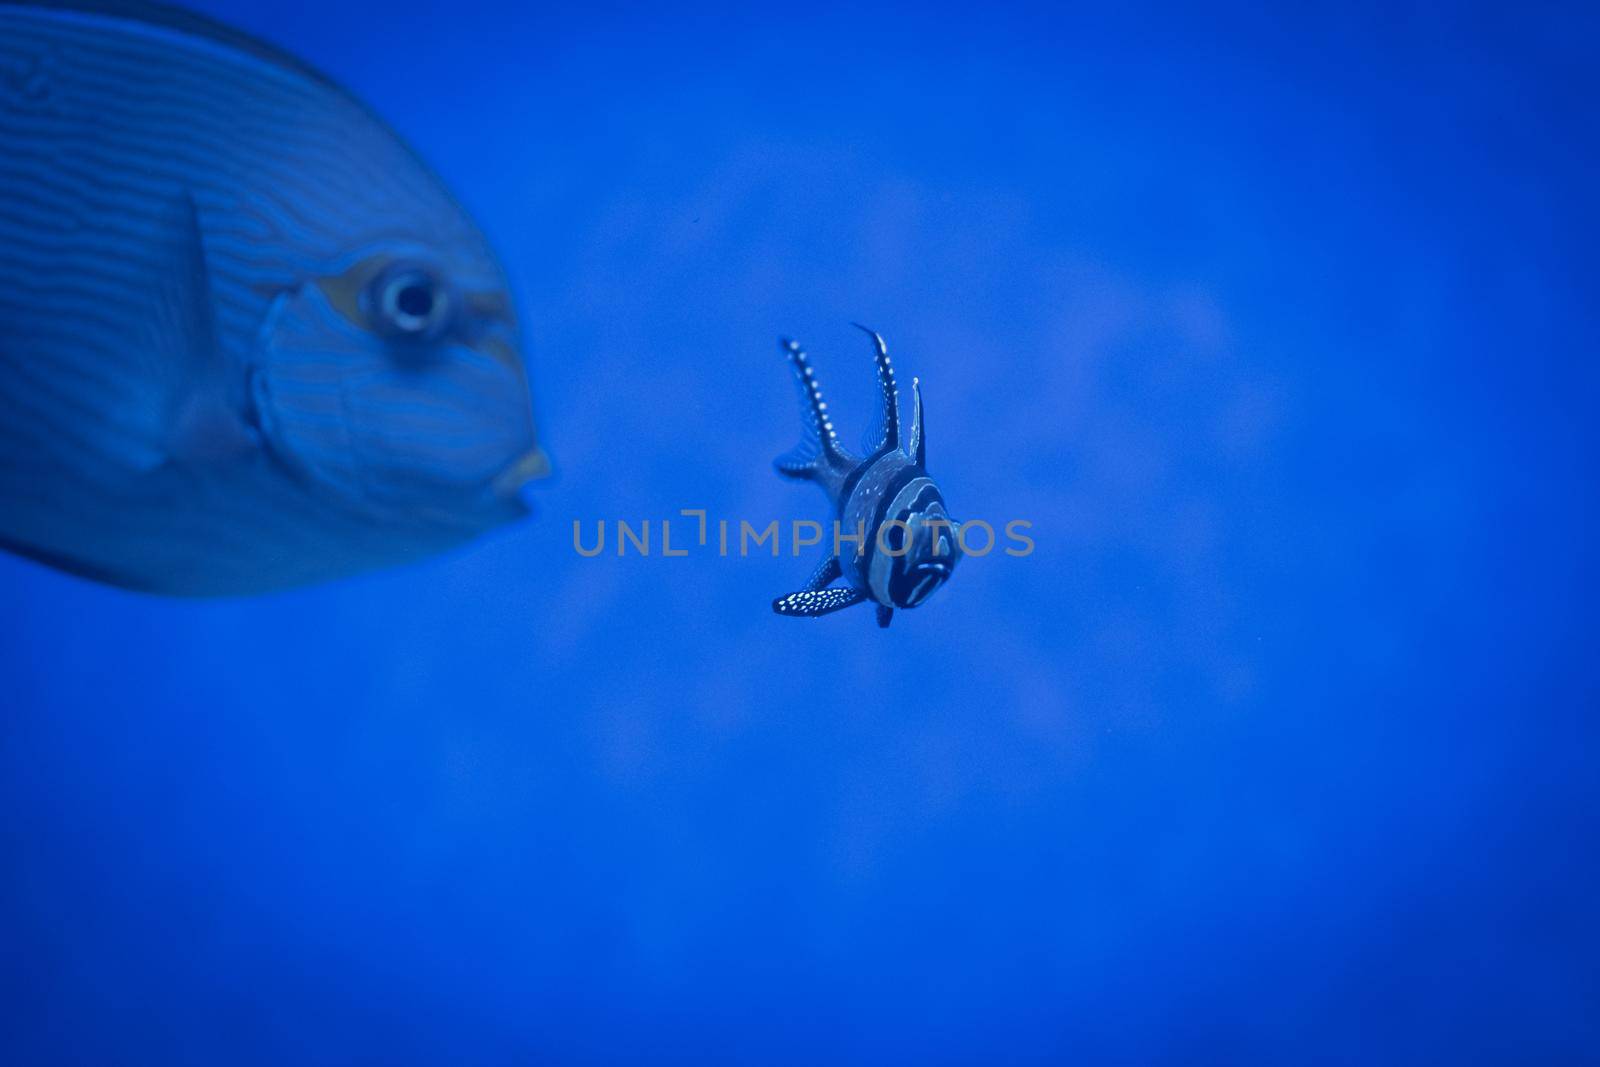 Marine aquarium and colorful fish. Pterapogon kauderni, Banggai cardinal fish in a blue water. Sea fish. Underwater life, wildlife nature.